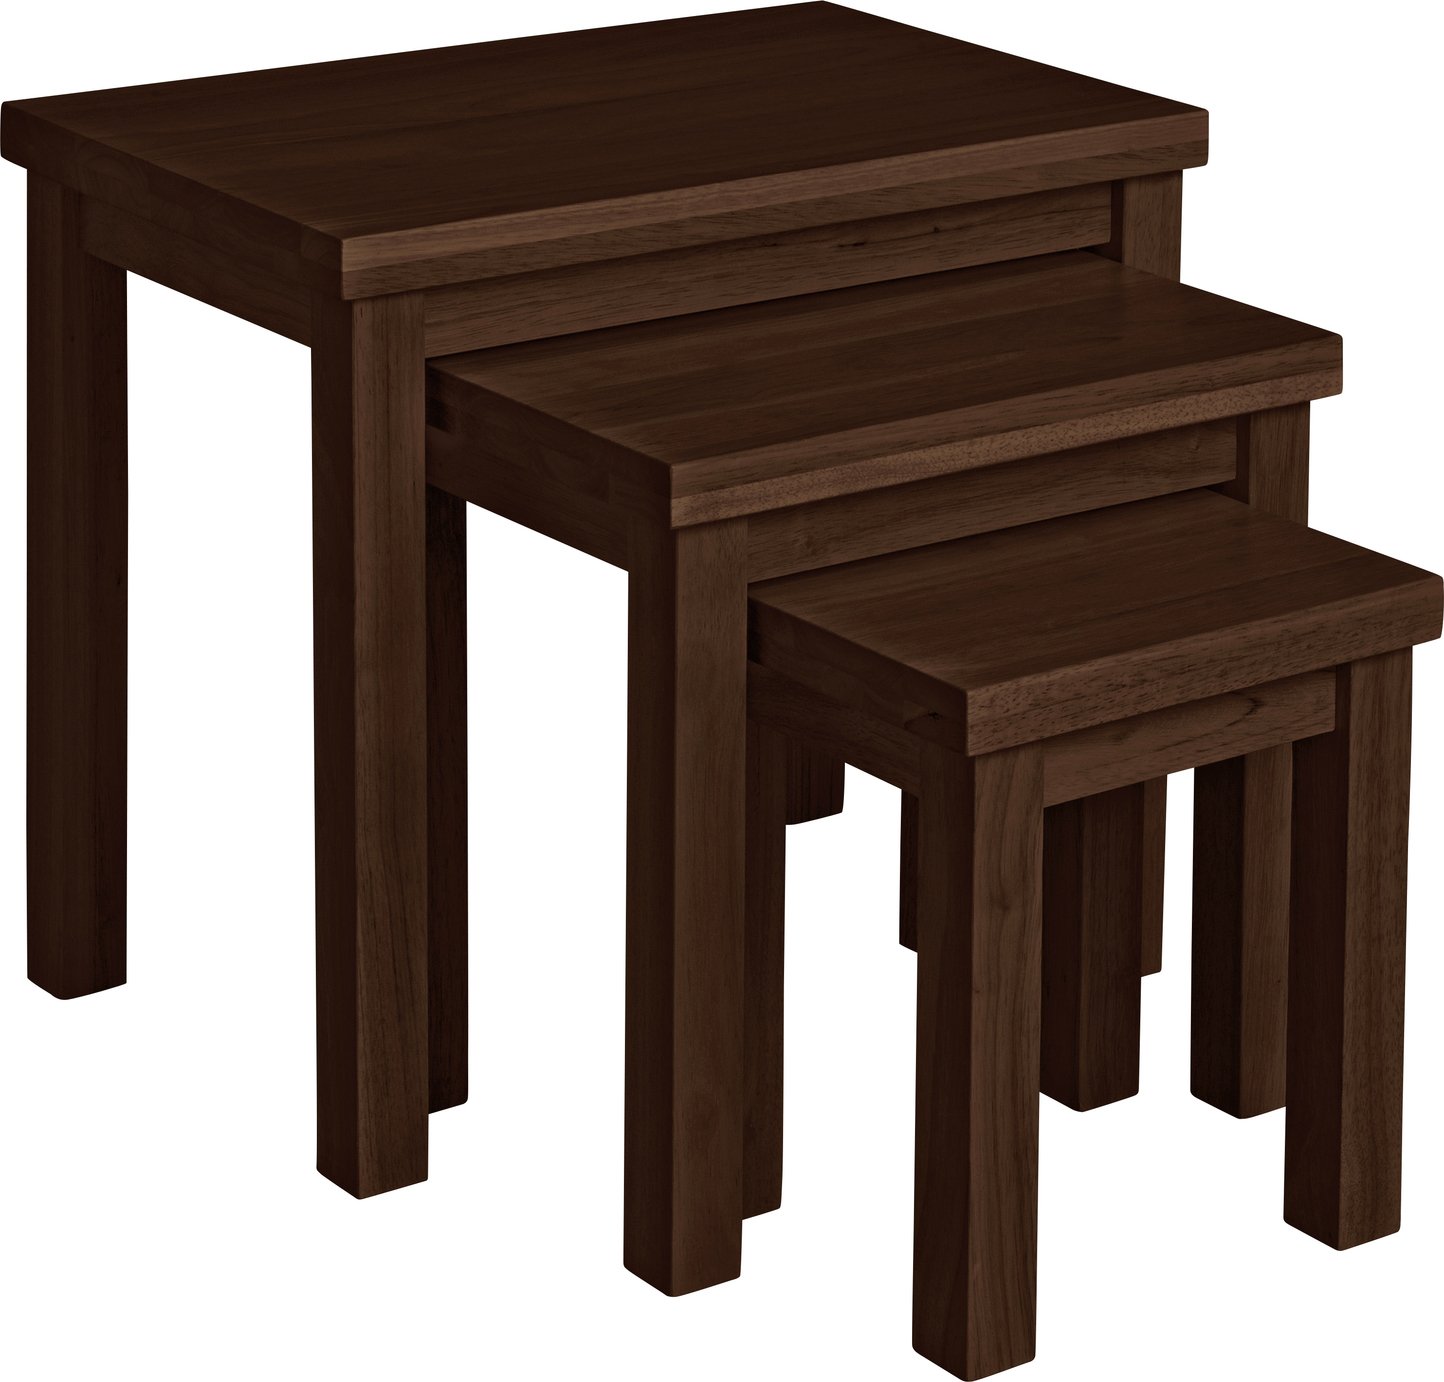 Argos Home Gloucester Nest of 3 Wooden Tables -Walnut Effect